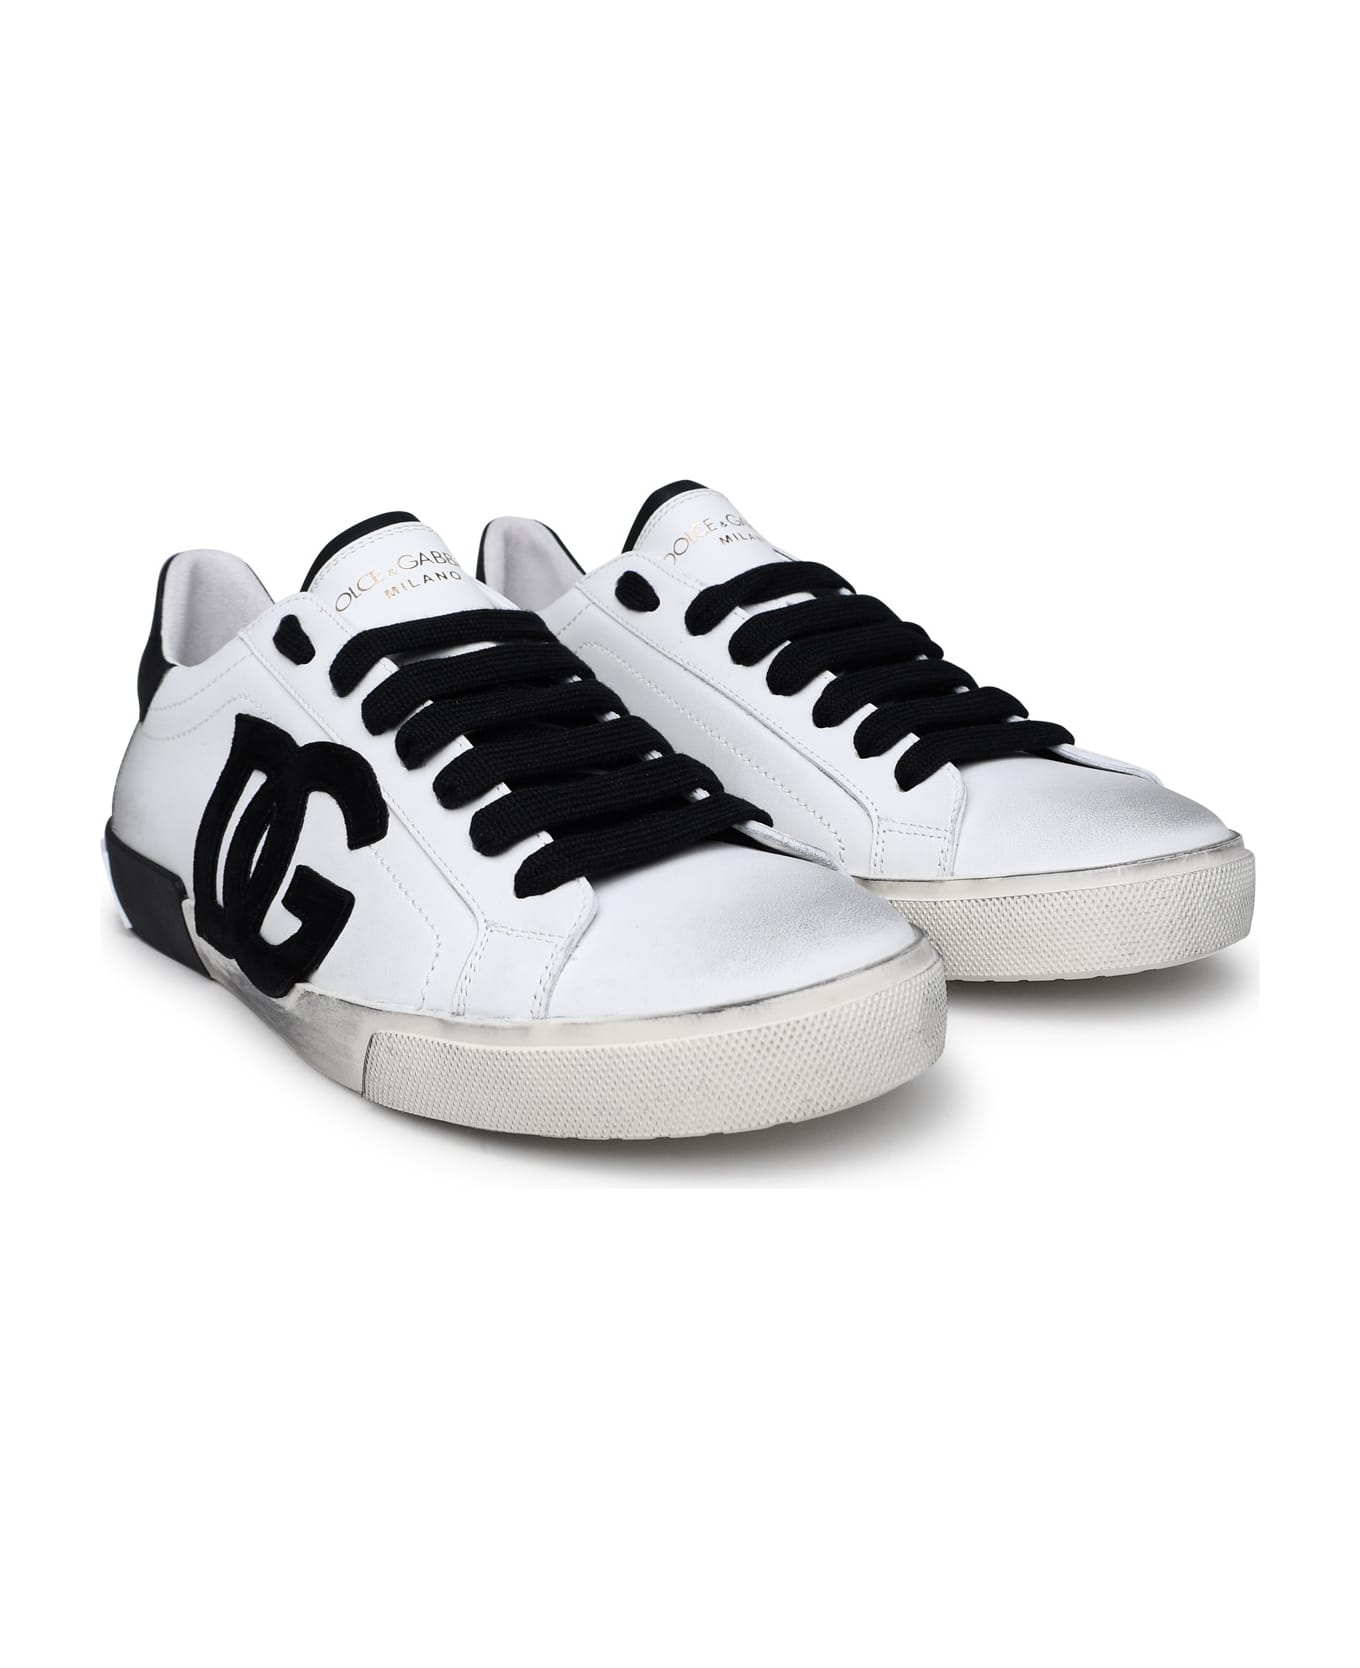 Dolce & Gabbana Leather Sneakers - BIANCO/NERO